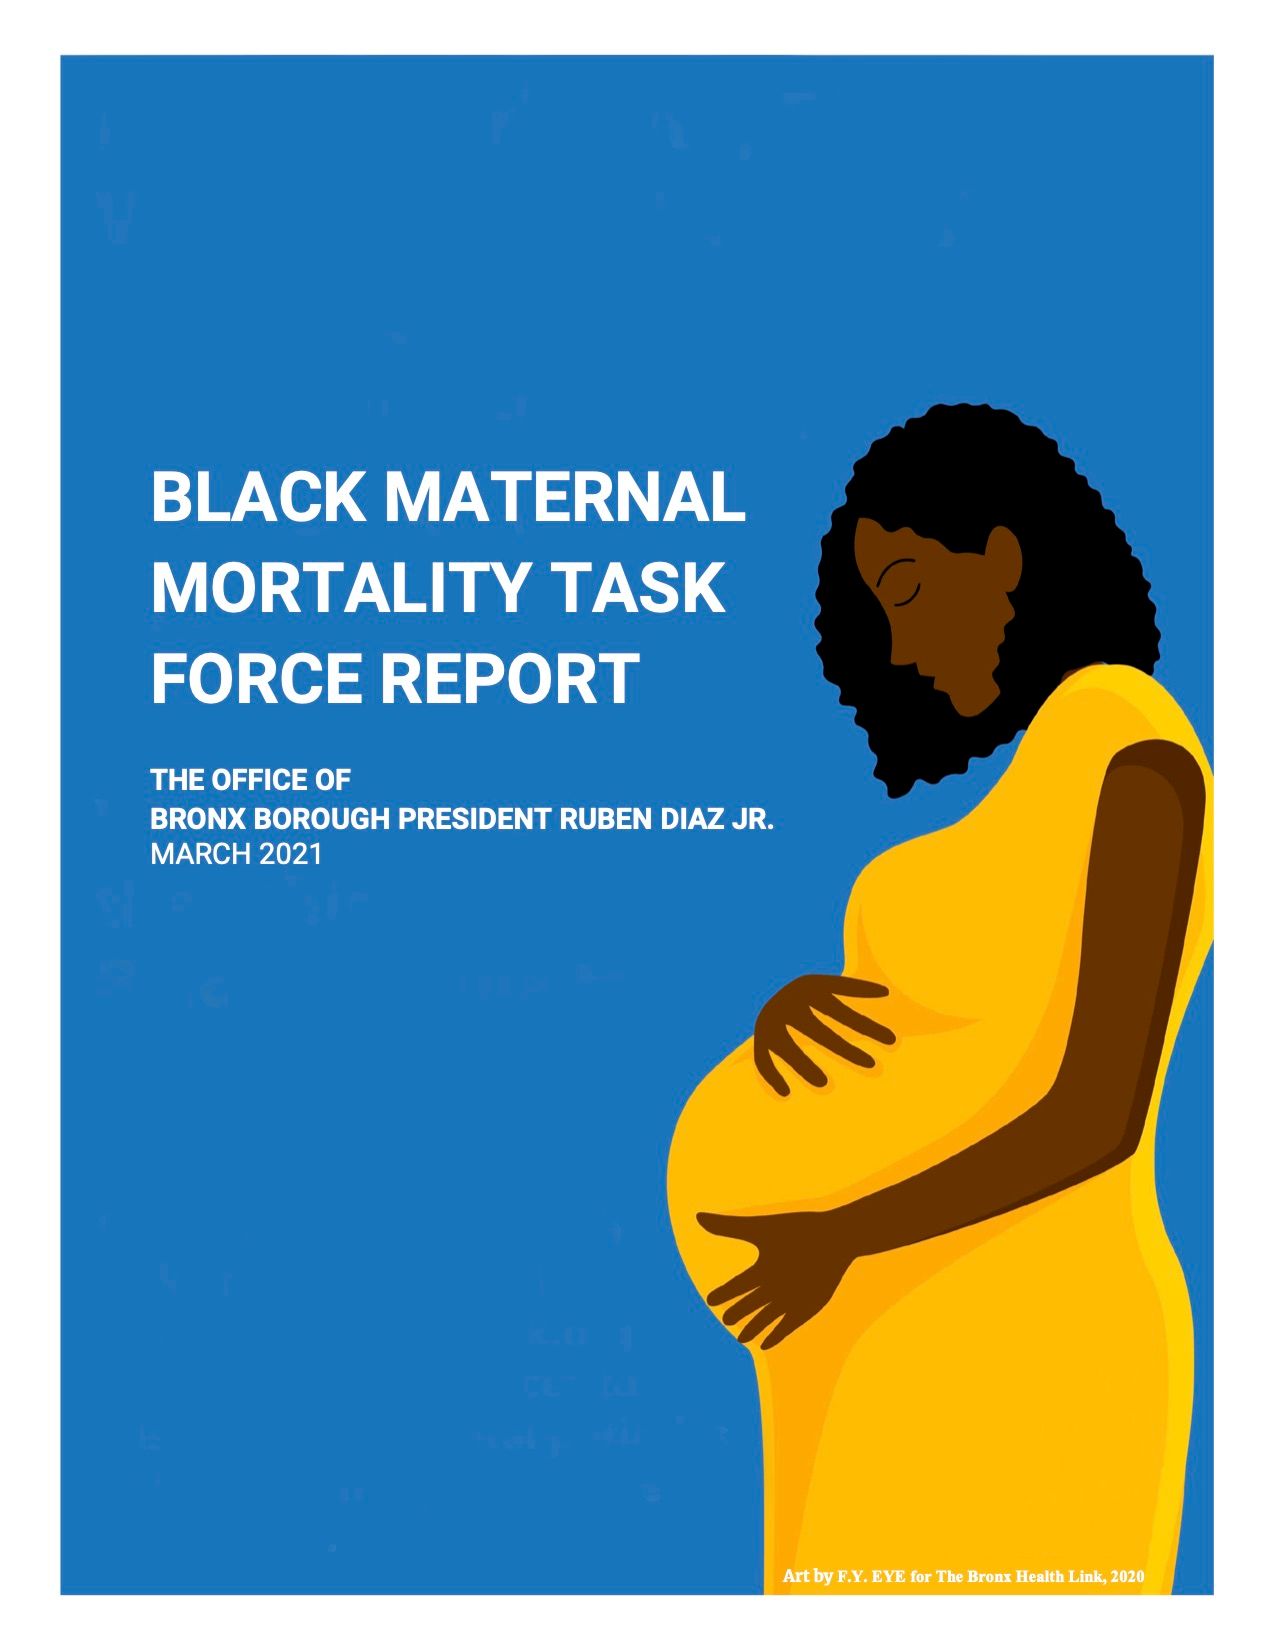 Black Maternal Mortality Taskforce Report